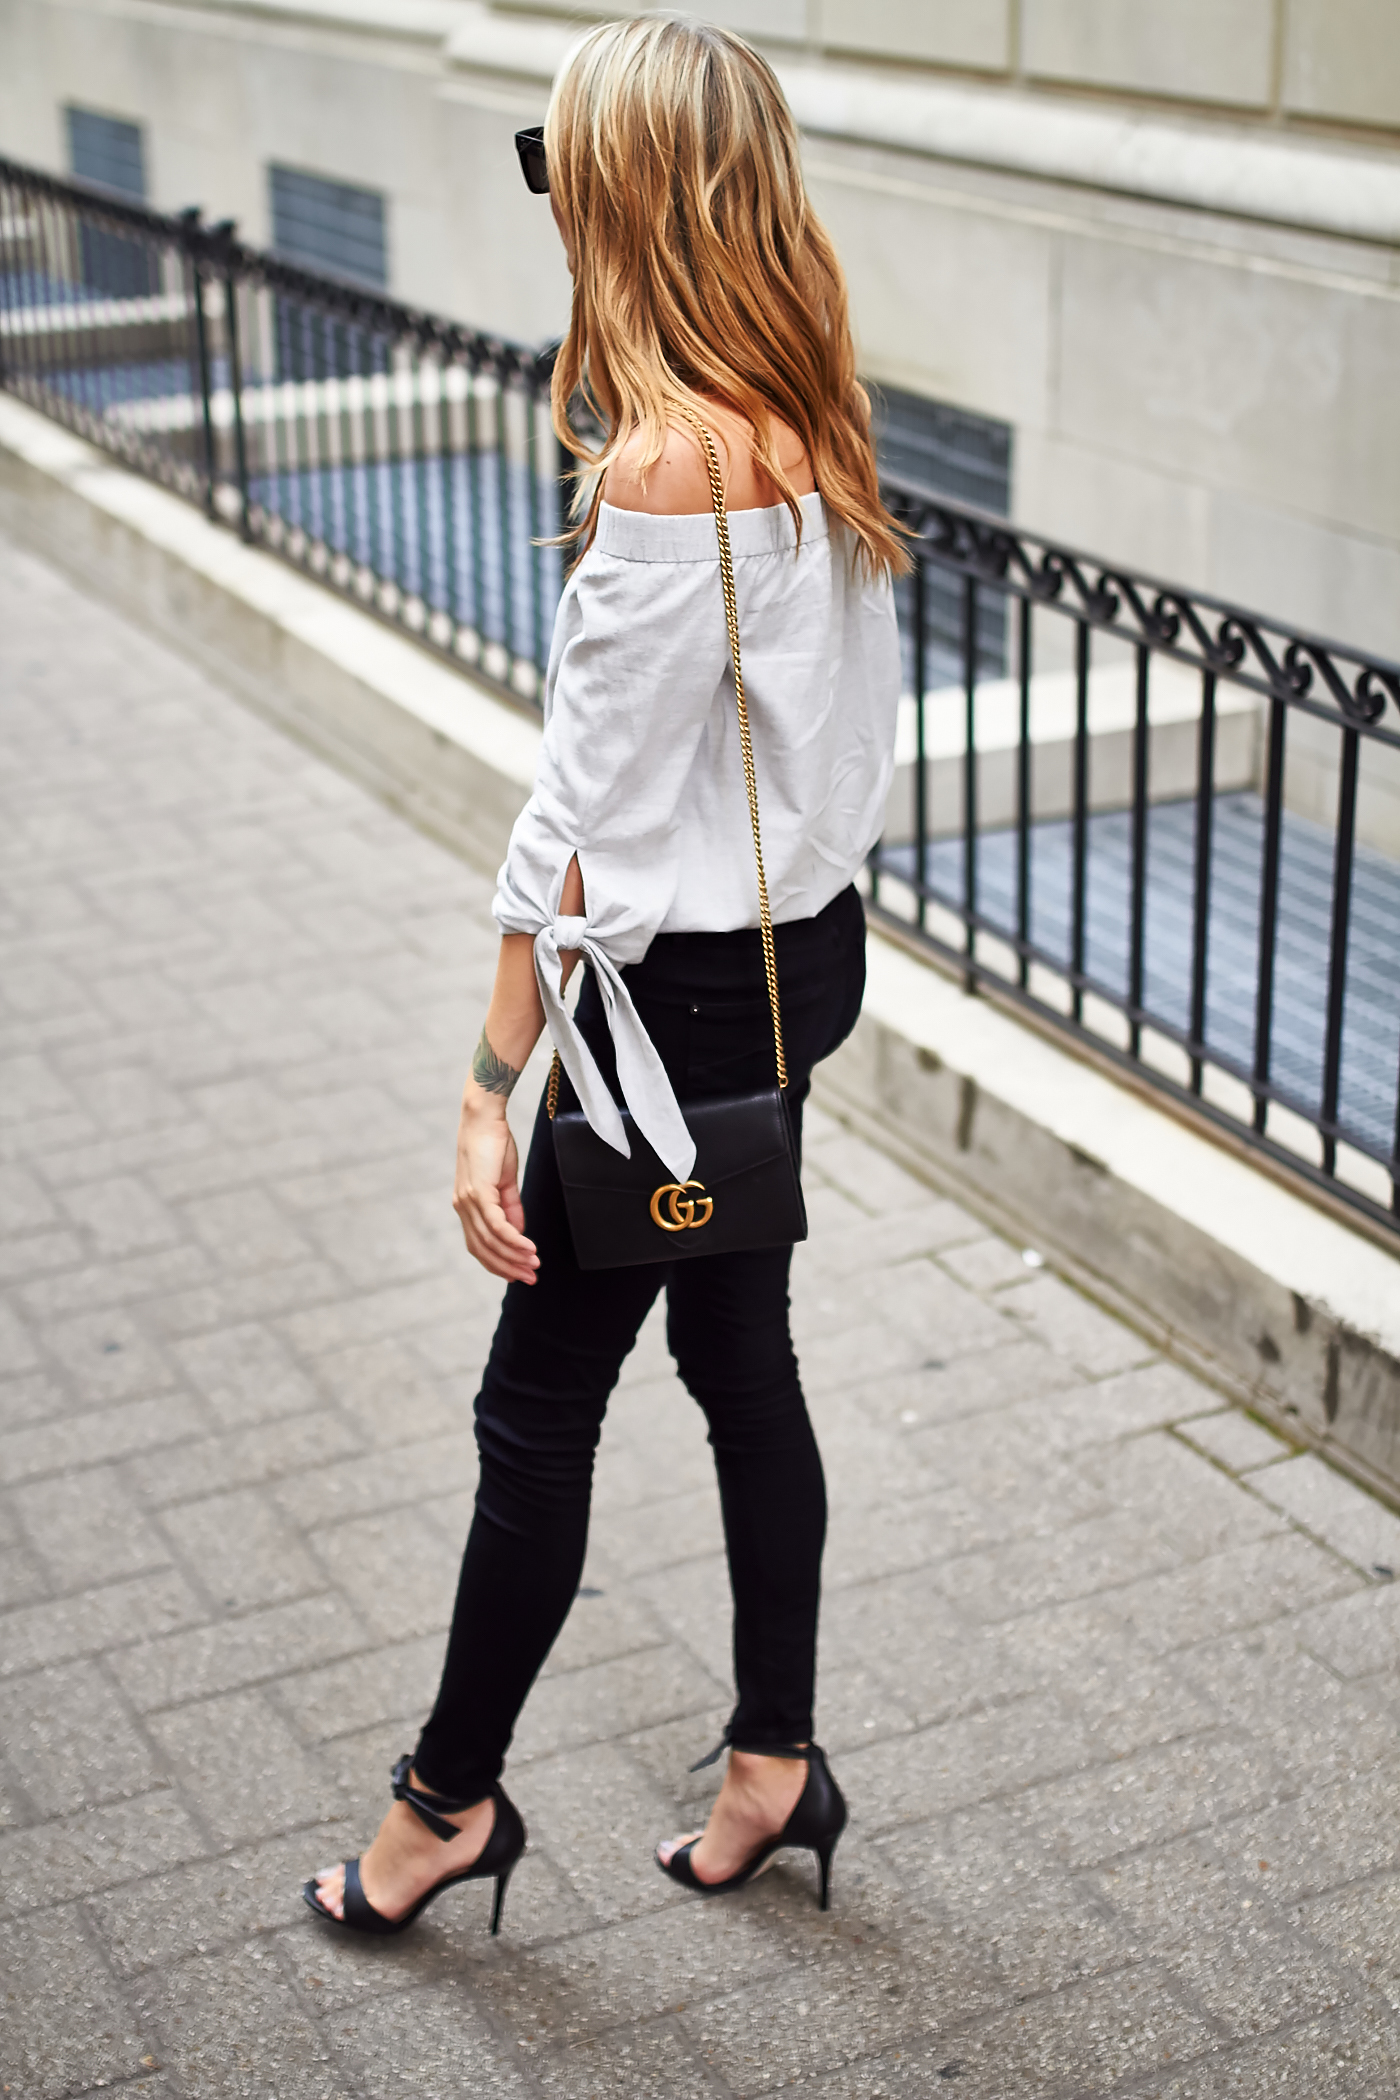 fashion-jackson-grey-off-the-shoulder-top-black-skinny-jeans-gucci-marmont-handbag-black-heels